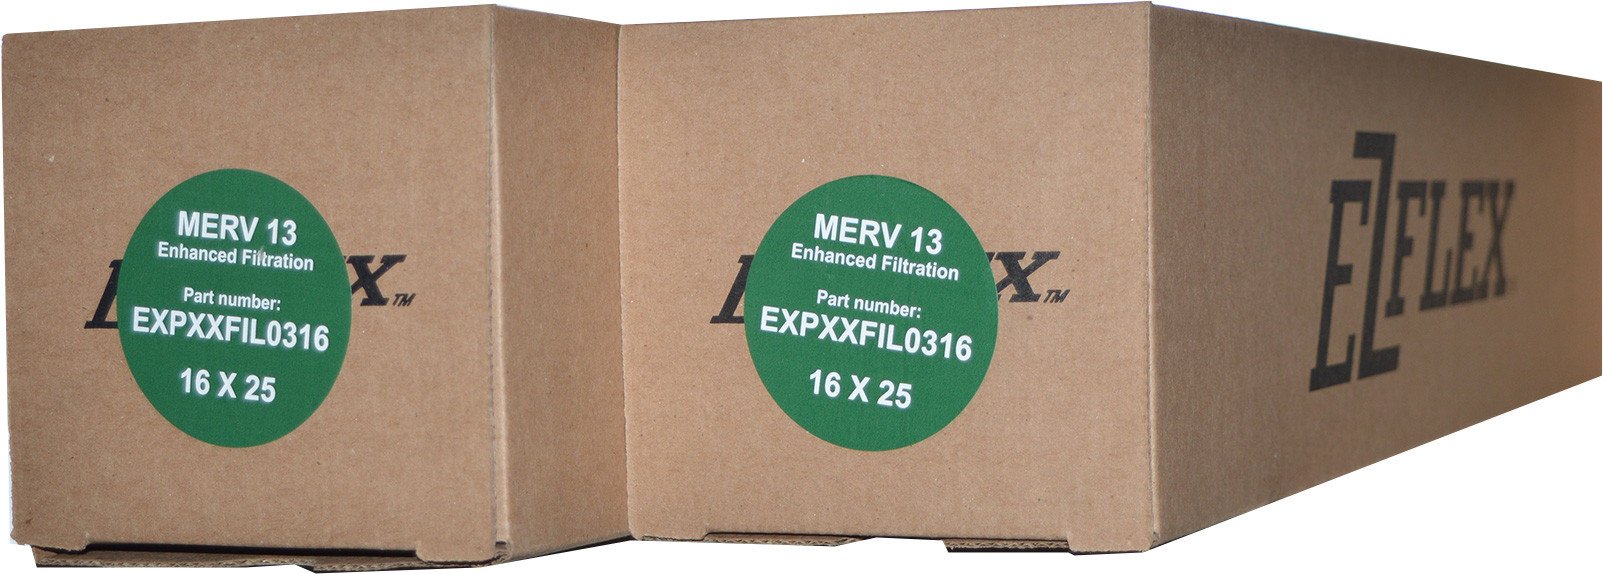 Carrier EXPXXFIL0316 Furnace Filter Size 16 x 25 x 4 5/16